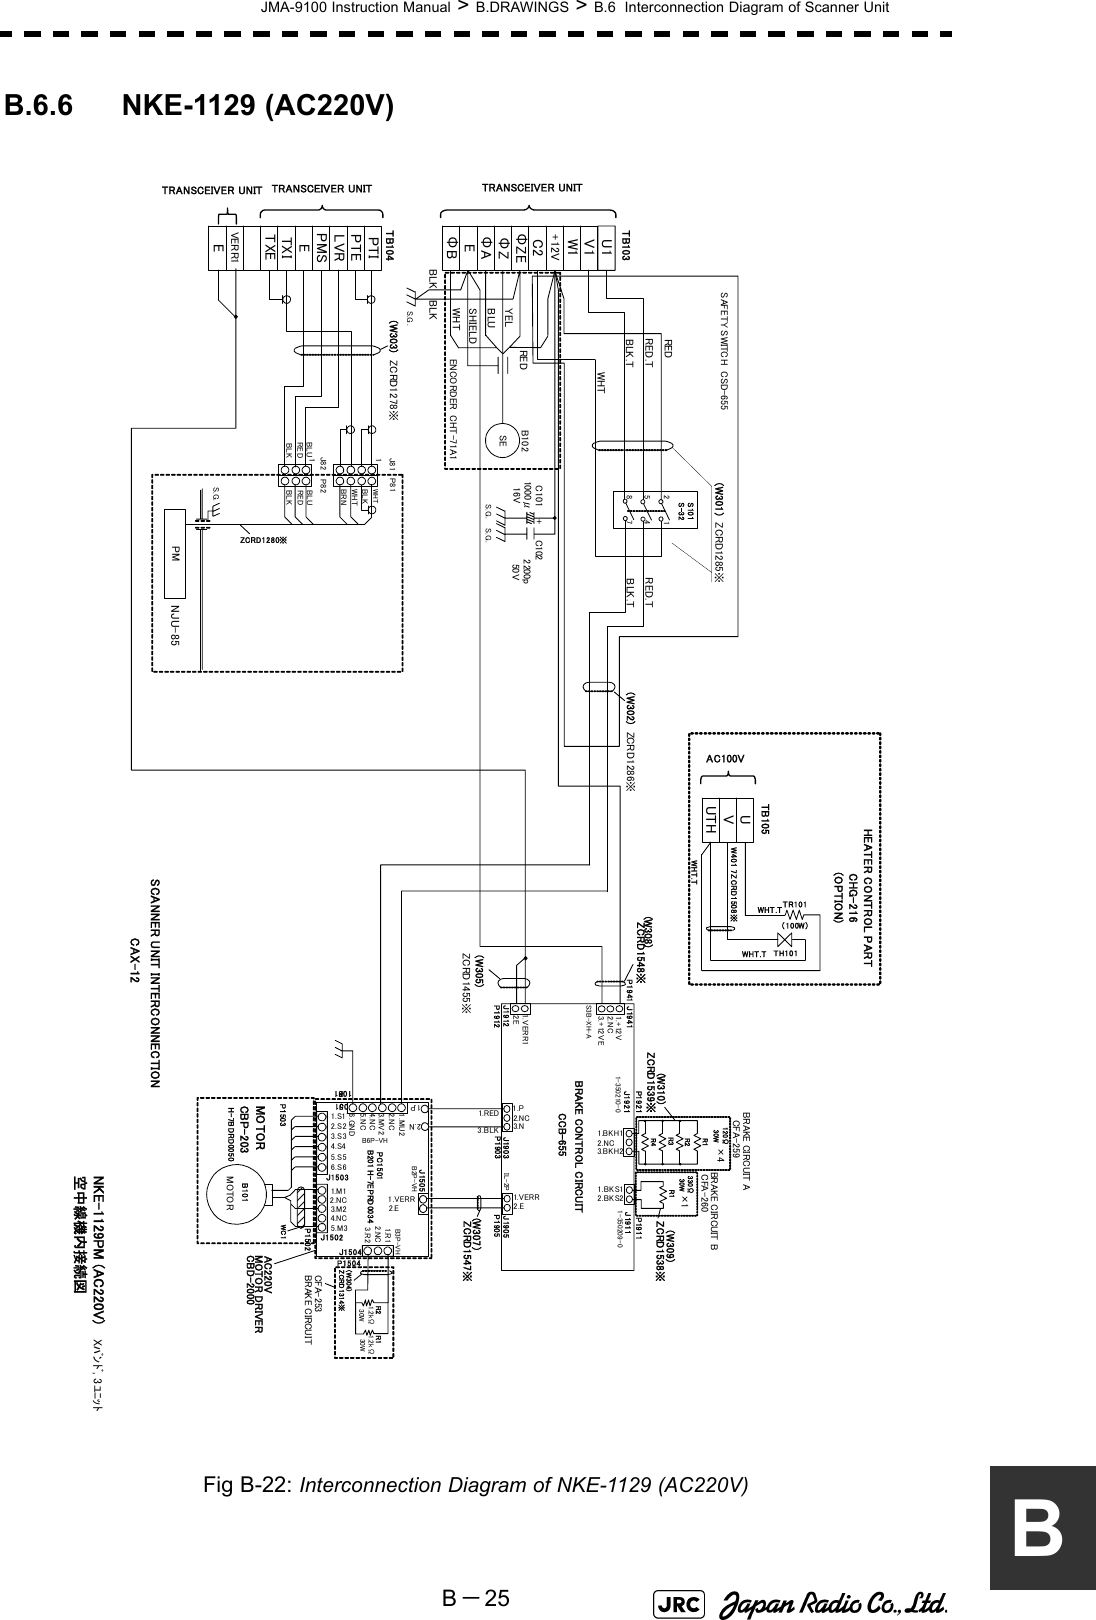 JMA-9100 Instruction Manual &gt; B.DRAWINGS &gt; B.6  Interconnection Diagram of Scanner UnitB－25BB.6.6 NKE-1129 (AC220V)Fig B-22: Interconnection Diagram of NKE-1129 (AC220V) NKE-1129PM (AC220V)空中線機内接続図SCANNER UNIT INTERCONNECTIONCAX-12J82J81 P81P82WHTBLKBLUREDBLKWHTBRNU1V1W1+12VC2ΦZEΦZΦAEΦBREDSHIELDYELBLUWHTSEB102BLKBLKENCORDER CHT-71A1C102C1012200p50V1000μ16V+S101S-32217548RED.TBLK.TREDPTIPTELVRPMSETXITXEVERR1EWHTRED.TBLK.TTRANSCEIVER UNITTRANSCEIVER UNIT11BLUREDBLKPMNJU-85ZCRD1280※TB103TB104（W301) ZCRD1285※（W303) ZCRD1278※SAFETY SWITCH CSD-655（W302) ZCRD1286※S.G.S.G.S.G .S.G.Xﾊﾞﾝﾄﾞ, 3ﾕﾆｯﾄTRANSCEIVER UNIT（W305)ZCRD1455※TH101TR101（100W）WHT.THEATER CO NTROL P ARTCHG-216(OPTION)UVUTHAC100VTB105W401 7ZCRD1508※WHT.TWHT.TZCRD1548※1.VERR12.E1.VER R2.E1.P2.NC3.N 1.BKH13.BK H21.BKS12.BKS21.+12V2.NC3.+12VEP1941 J1941J1903P1903J1905P1905J1912P1912BRAKE CONTROL CIRCUITCCB-655J1921P1921J1911P19111.RED3.BLKIL-2PS3B-XH-A1-350210-0 1-350209-0ZCRD1547※(W307 )ZCRD1538※(W309)ZCRD1539※(W310)CBD-2000BRAKE CIRCUITCFA-253J15011.VERR2.EH-7EPRD0034B201J1505PC1501P1501B2P-VH1.P2.NP1502AC220VWC1CBP-203H-7BDRD00502.NC4.NC1.S12.S23.S34.S45.S56.S6J1502J15033.M21.M15.M3P1503MOTORMOTORB101(W308)MOTOR DRIVERBRAKE CIRCUIT BCFA-260BRAKE CIRCUIT ACFA-259R1R2R3R4R1120Ω30W330Ω30W×4×12.NC3.M V 21.MU22.N C4.N C5.N C6.GNDB6P-VH1.2kΩ30W1.2kΩ30W(W304)ZCRD1314※R1R2P15041.R 13.R2J1504B3P-VH2.NC